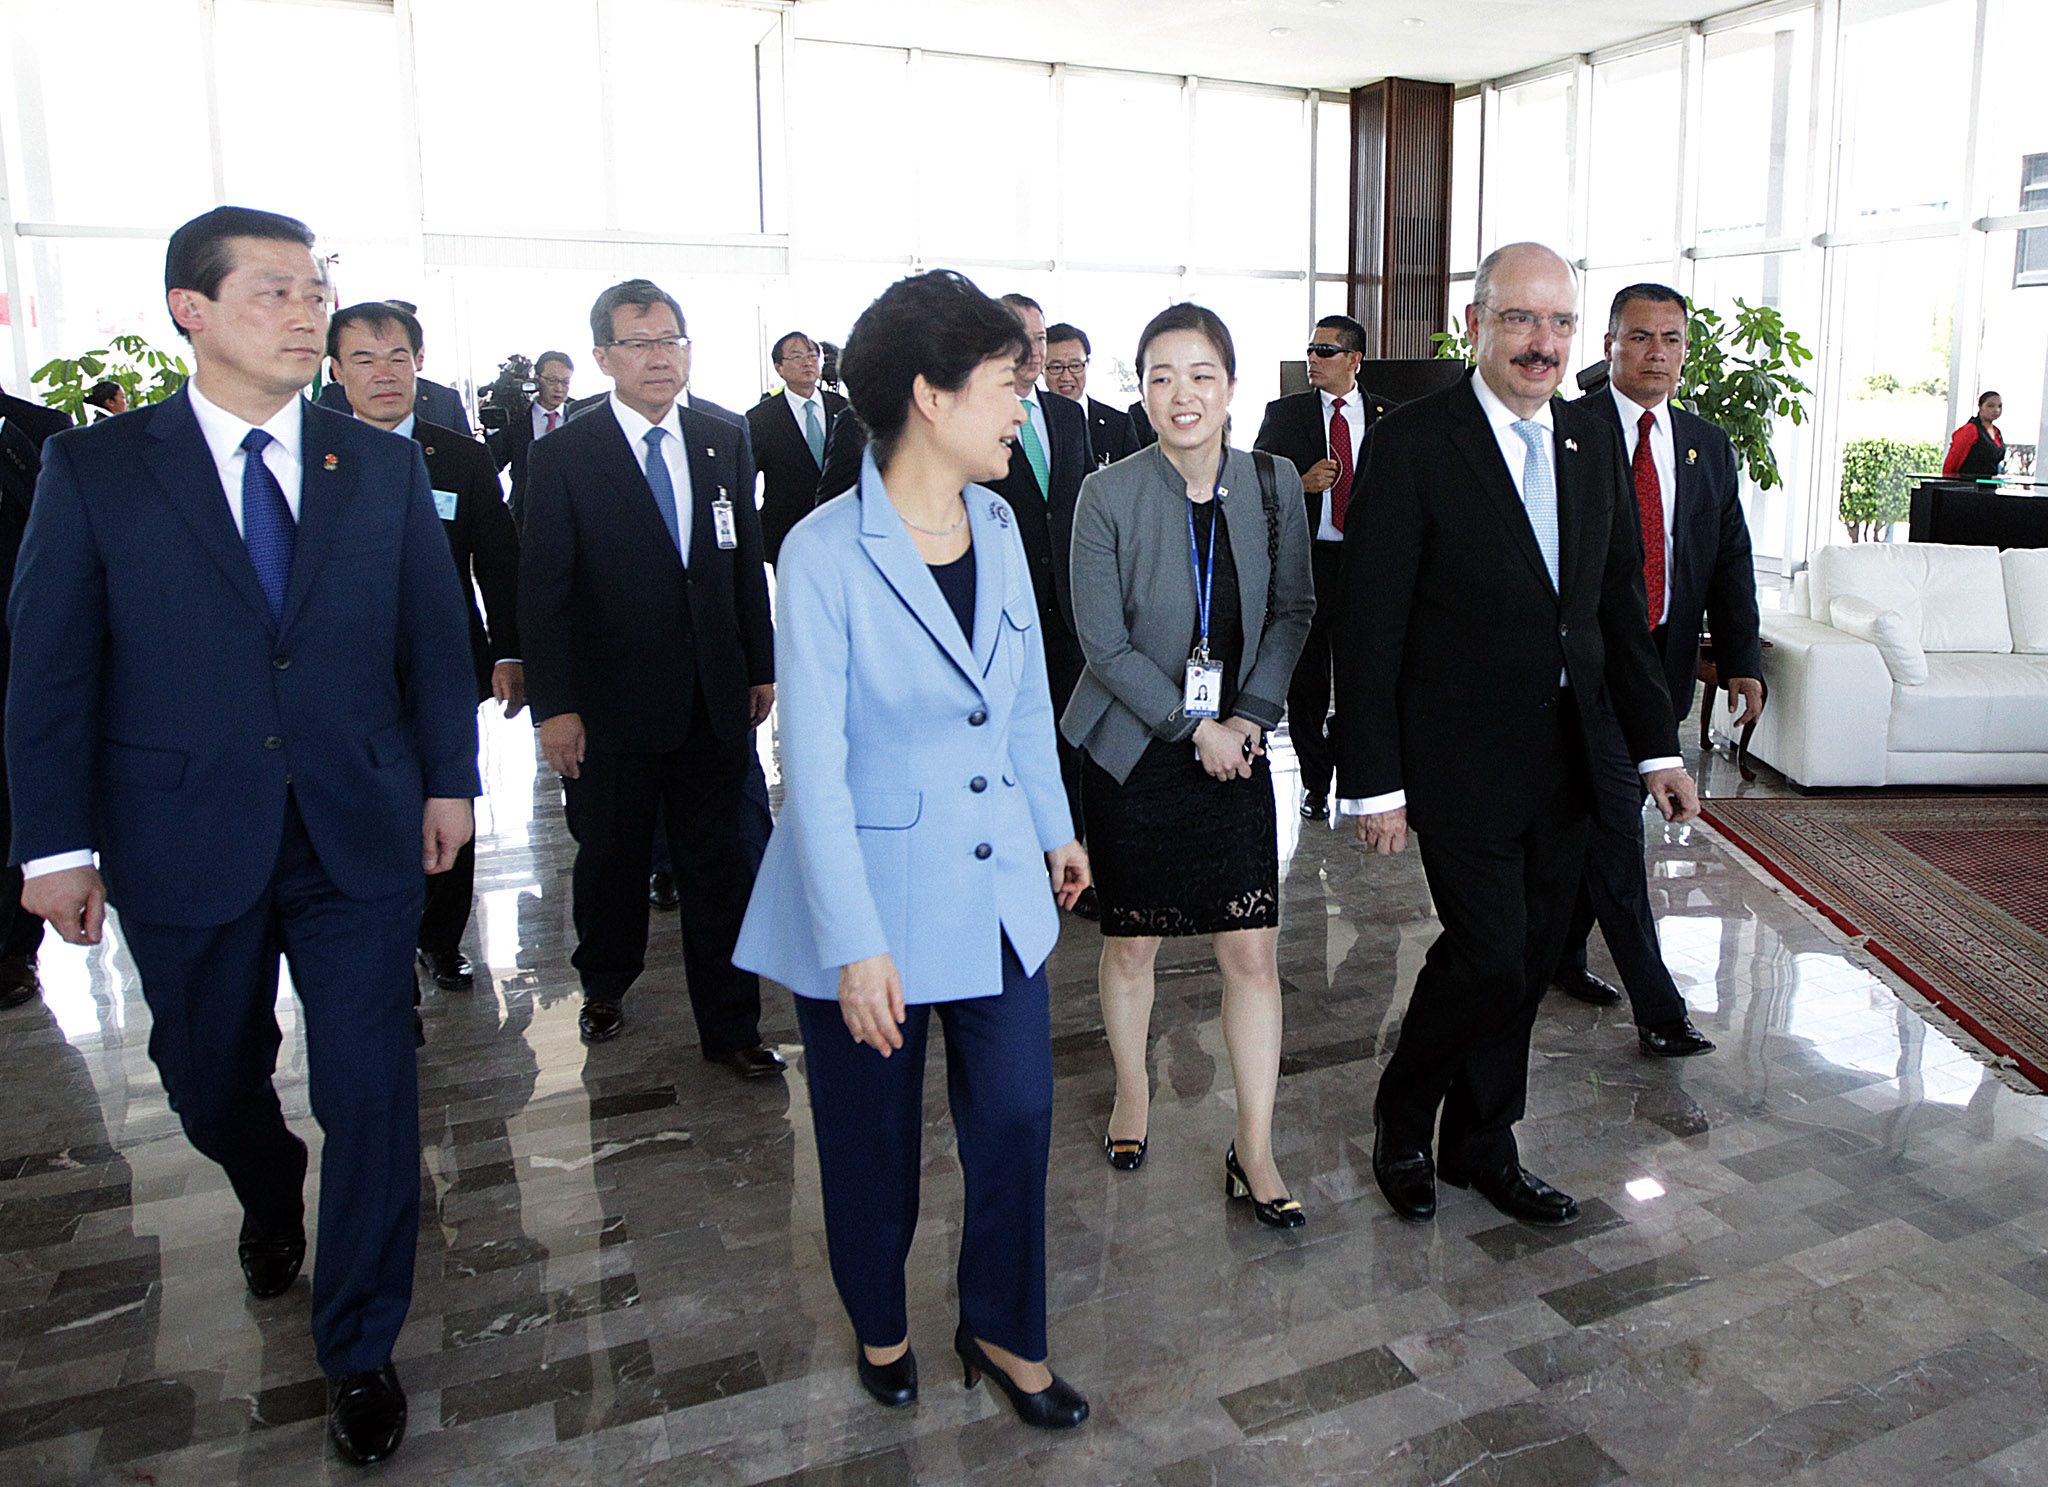 fOTO 4 Arribo de la Presidenta de la Rep blica de Corea  Excma. Sra. Park Geun hye.jpg